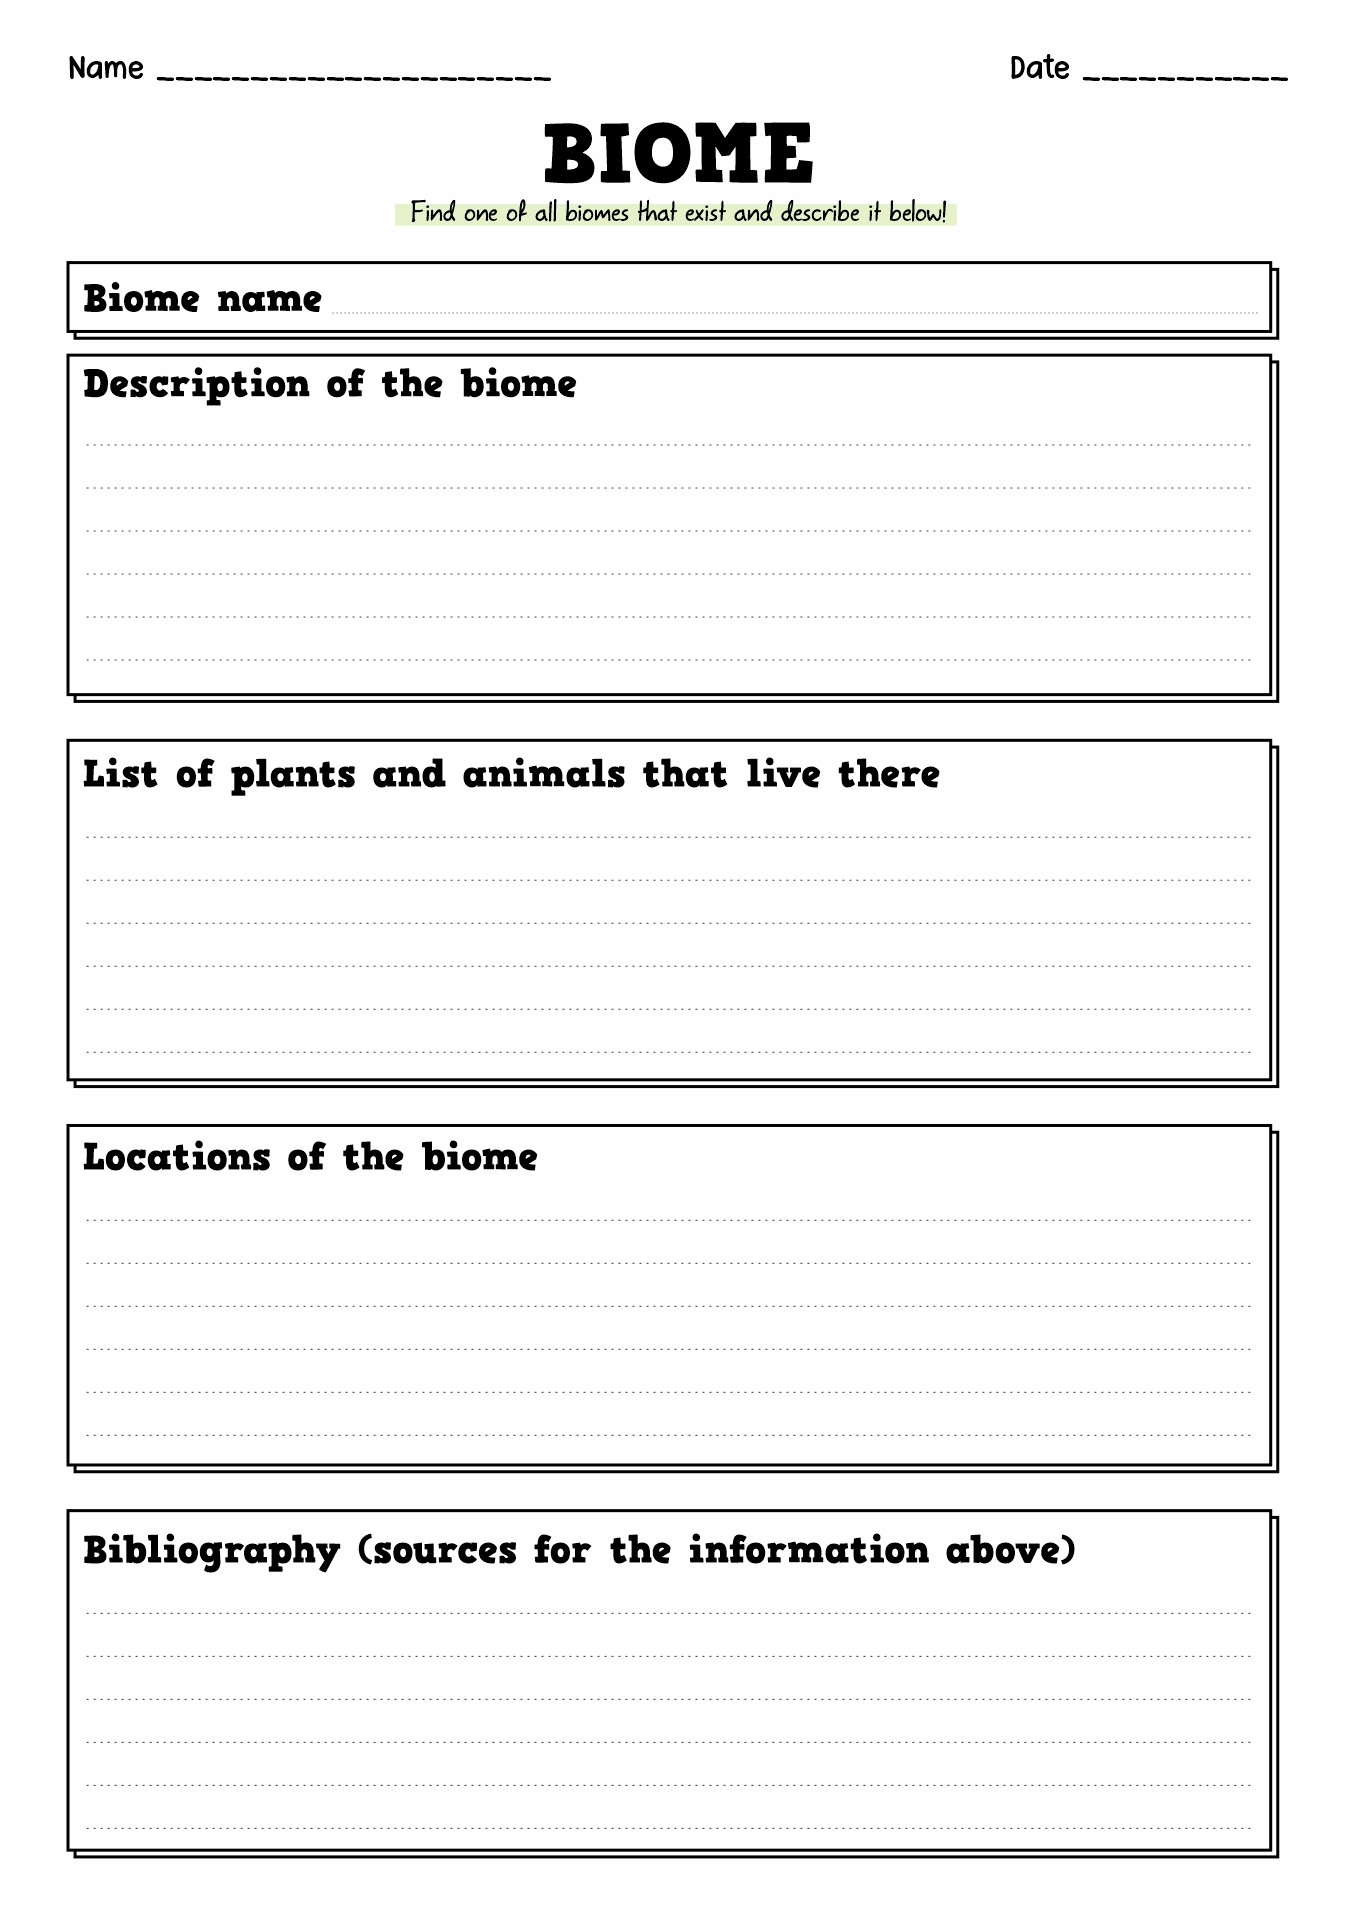 11-best-images-of-biome-activity-worksheet-printable-biome-worksheets